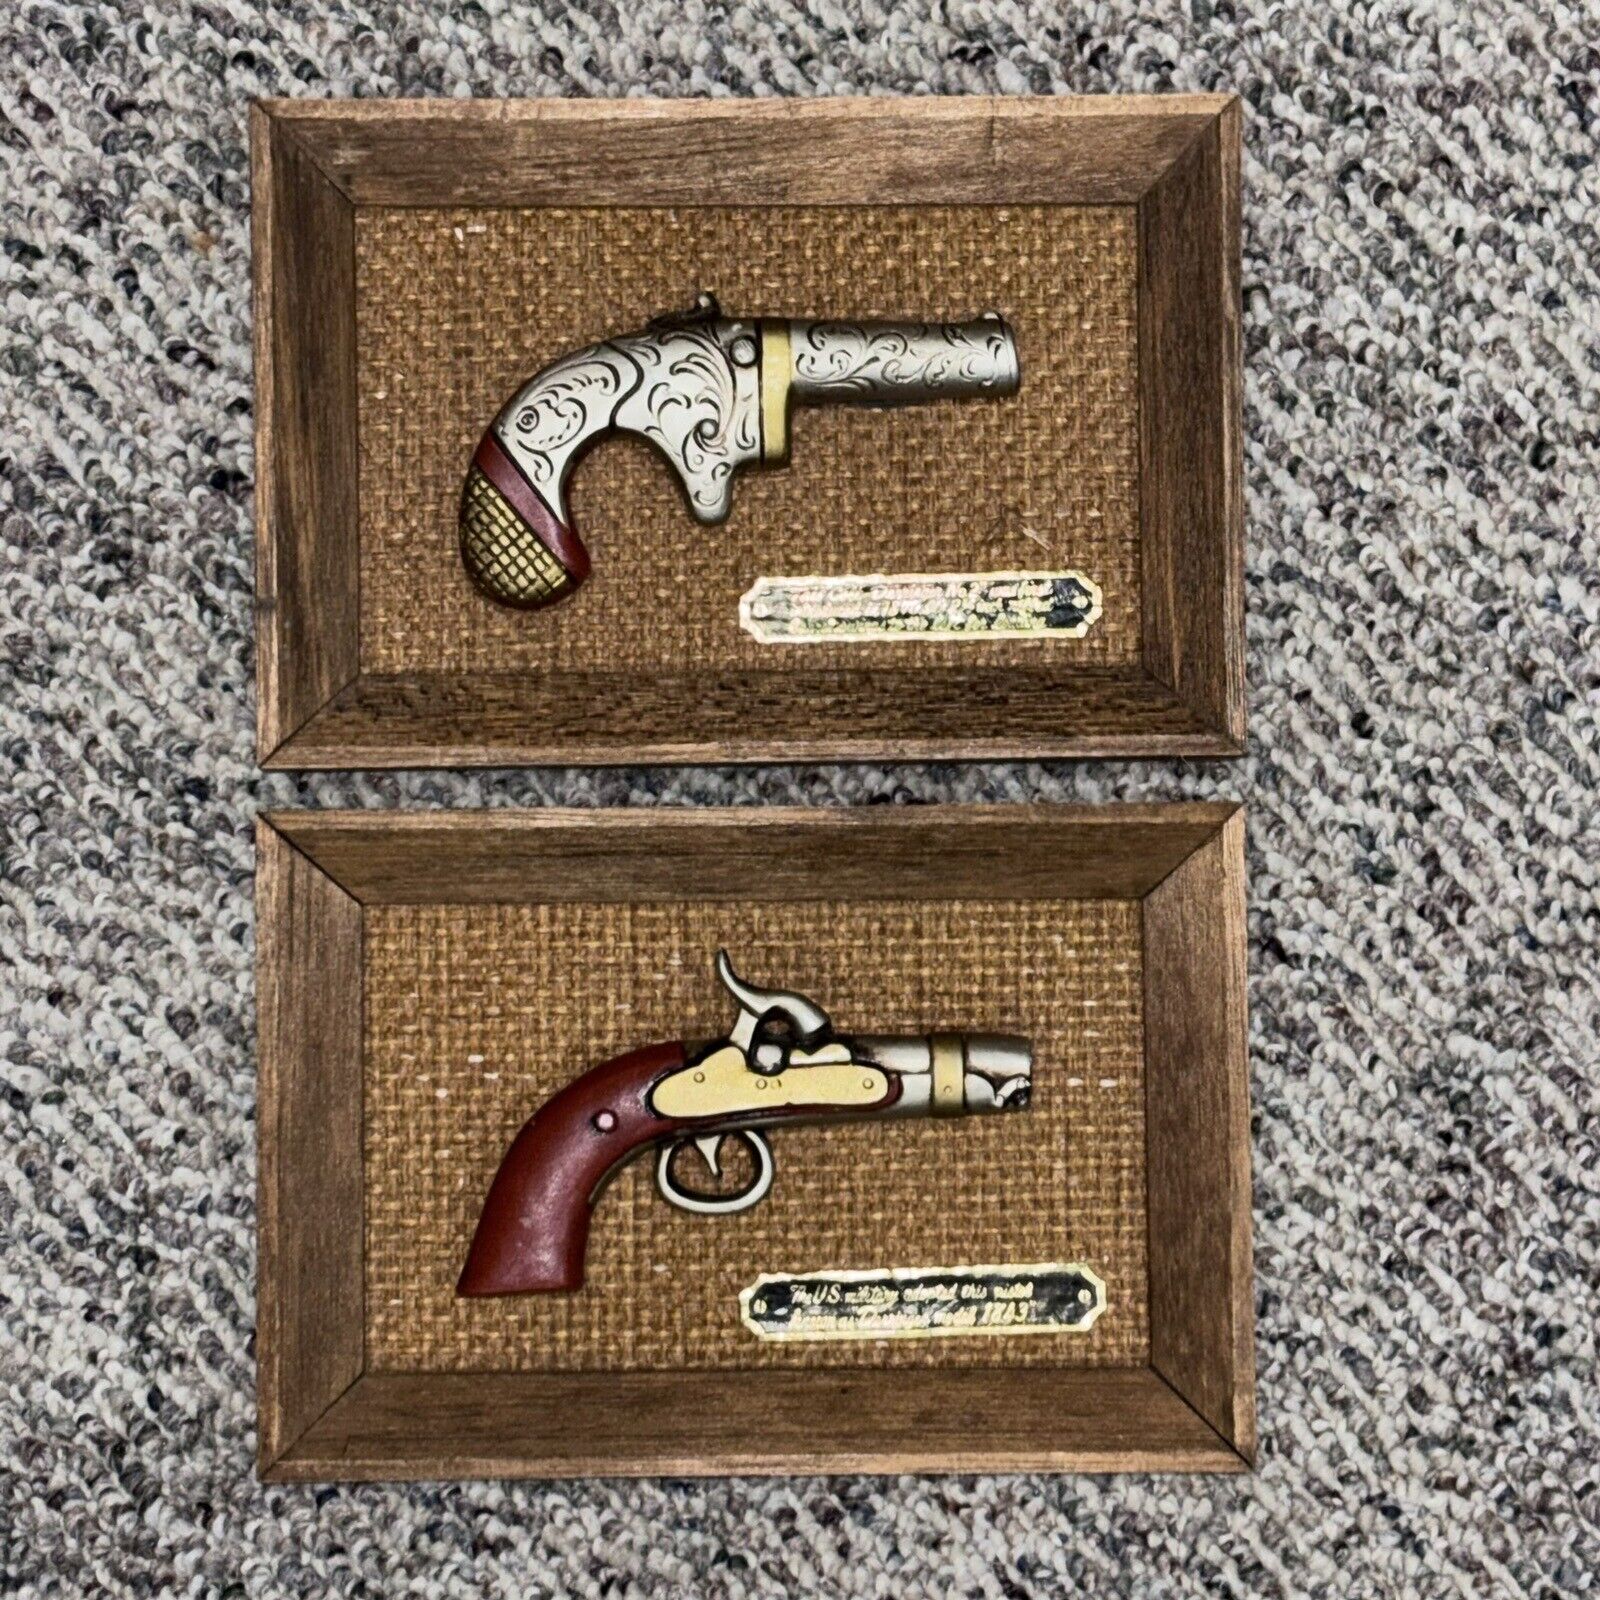 2 Vintage Gun Art Derringer Pistols Wooden Plaque From KI Japan 3-D